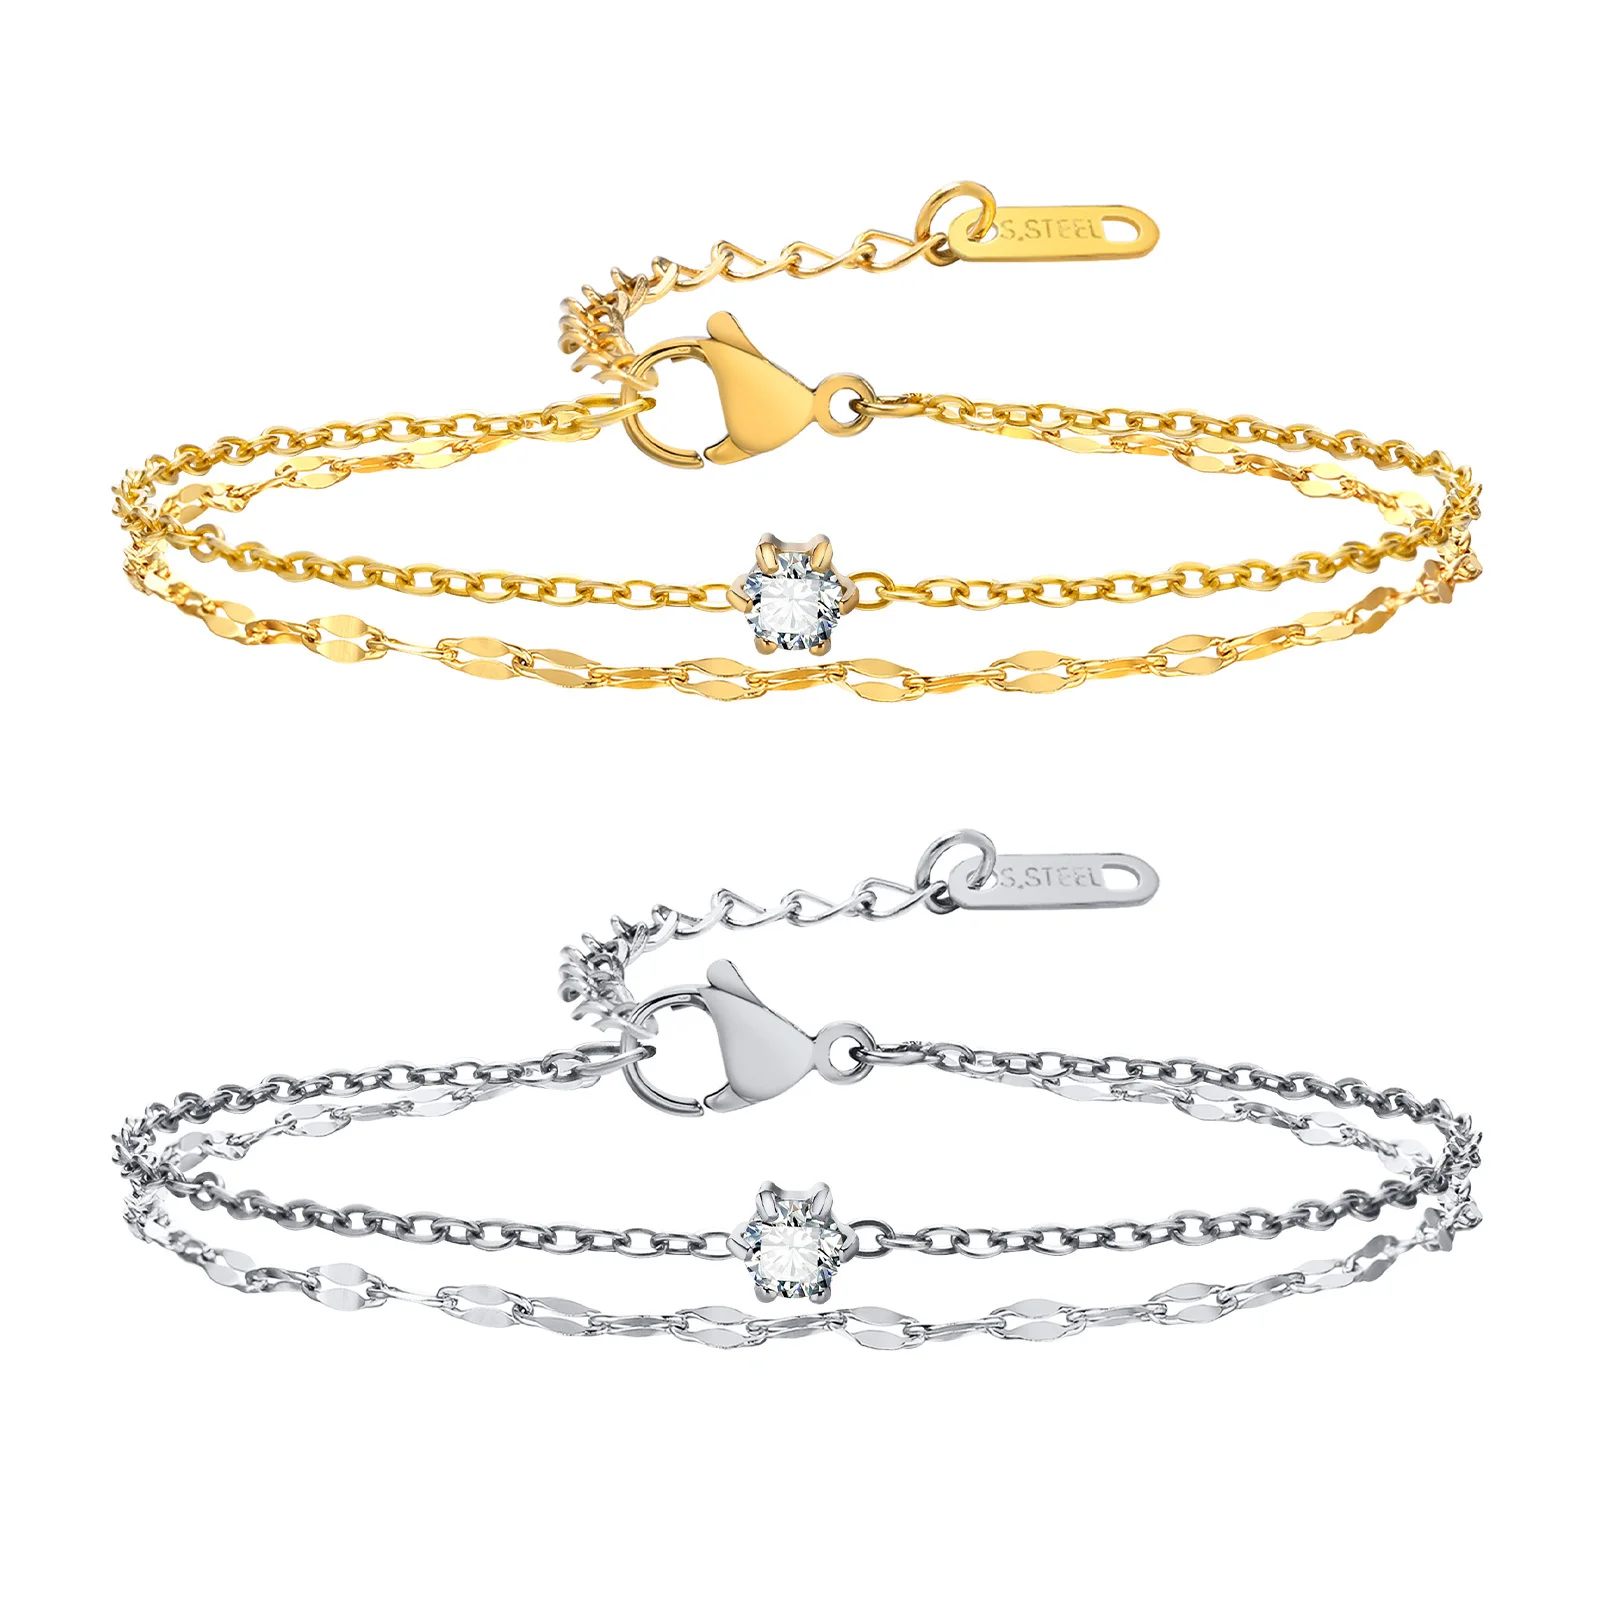 Double Chain Bracelet Zirconia,Adjustale Link Stainless Steel Stackable Jewelry, Women Girls Sister Mother Chrismas Gift